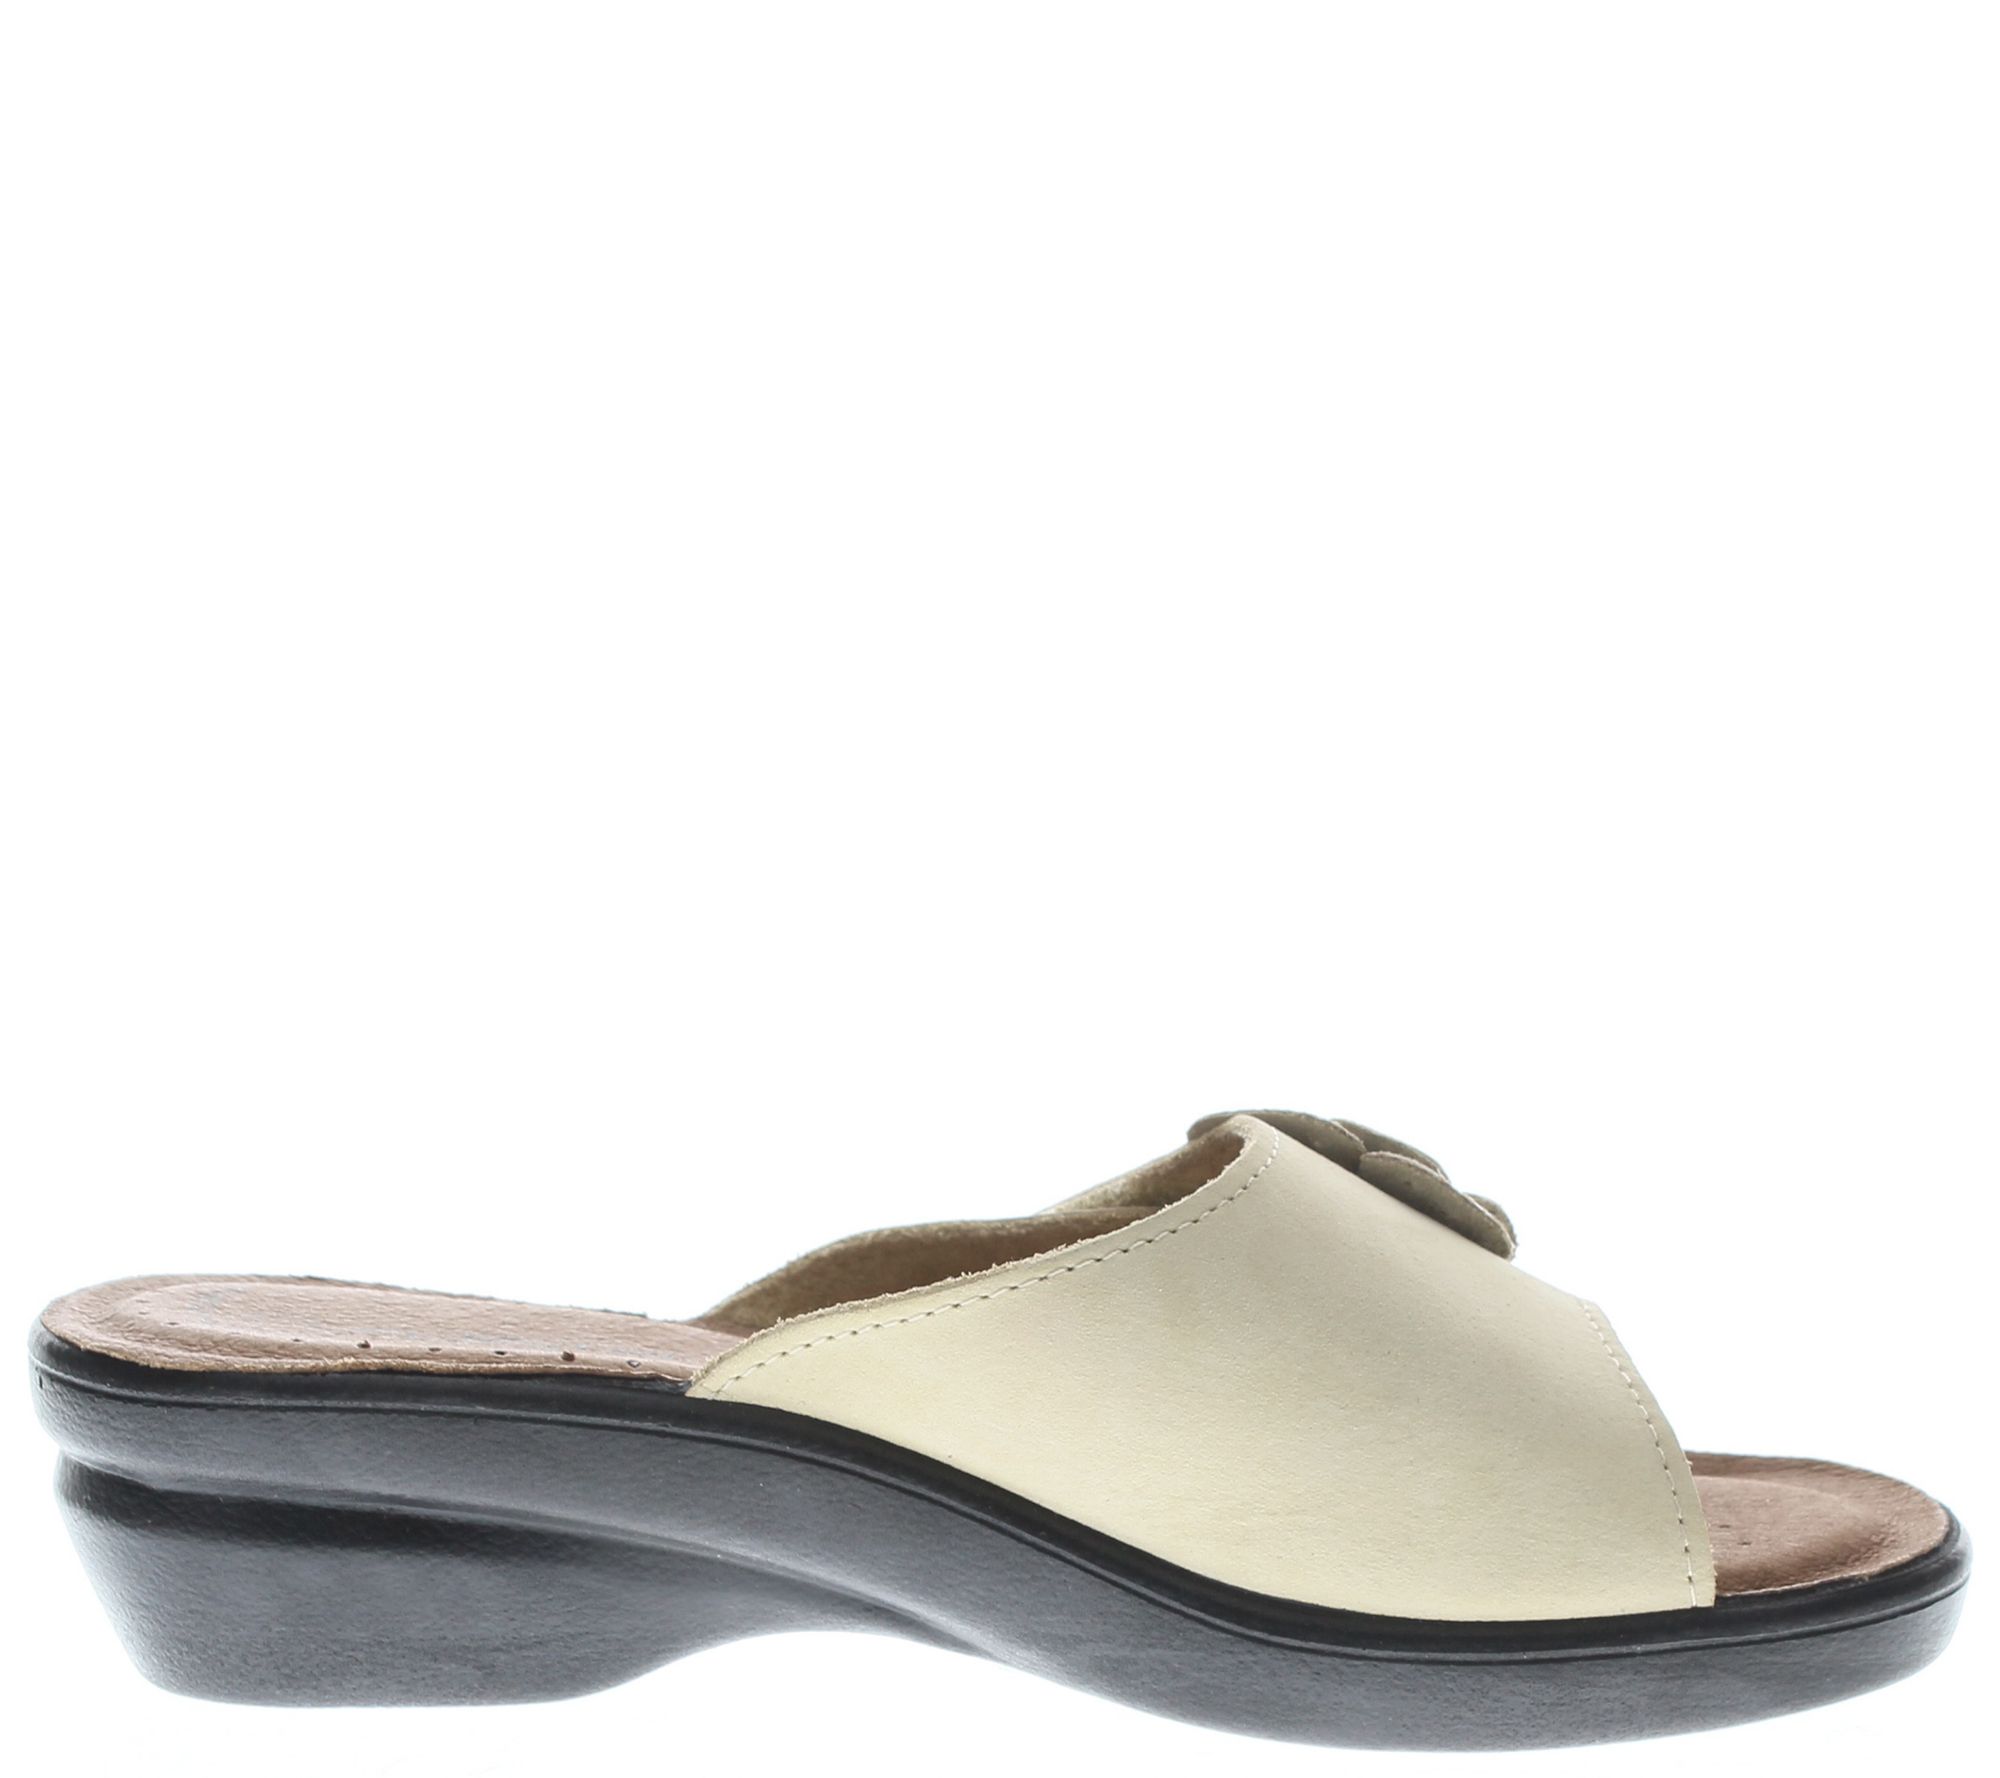 Flexus by Spring Step Leather Slide Sandals - Fabia - QVC.com